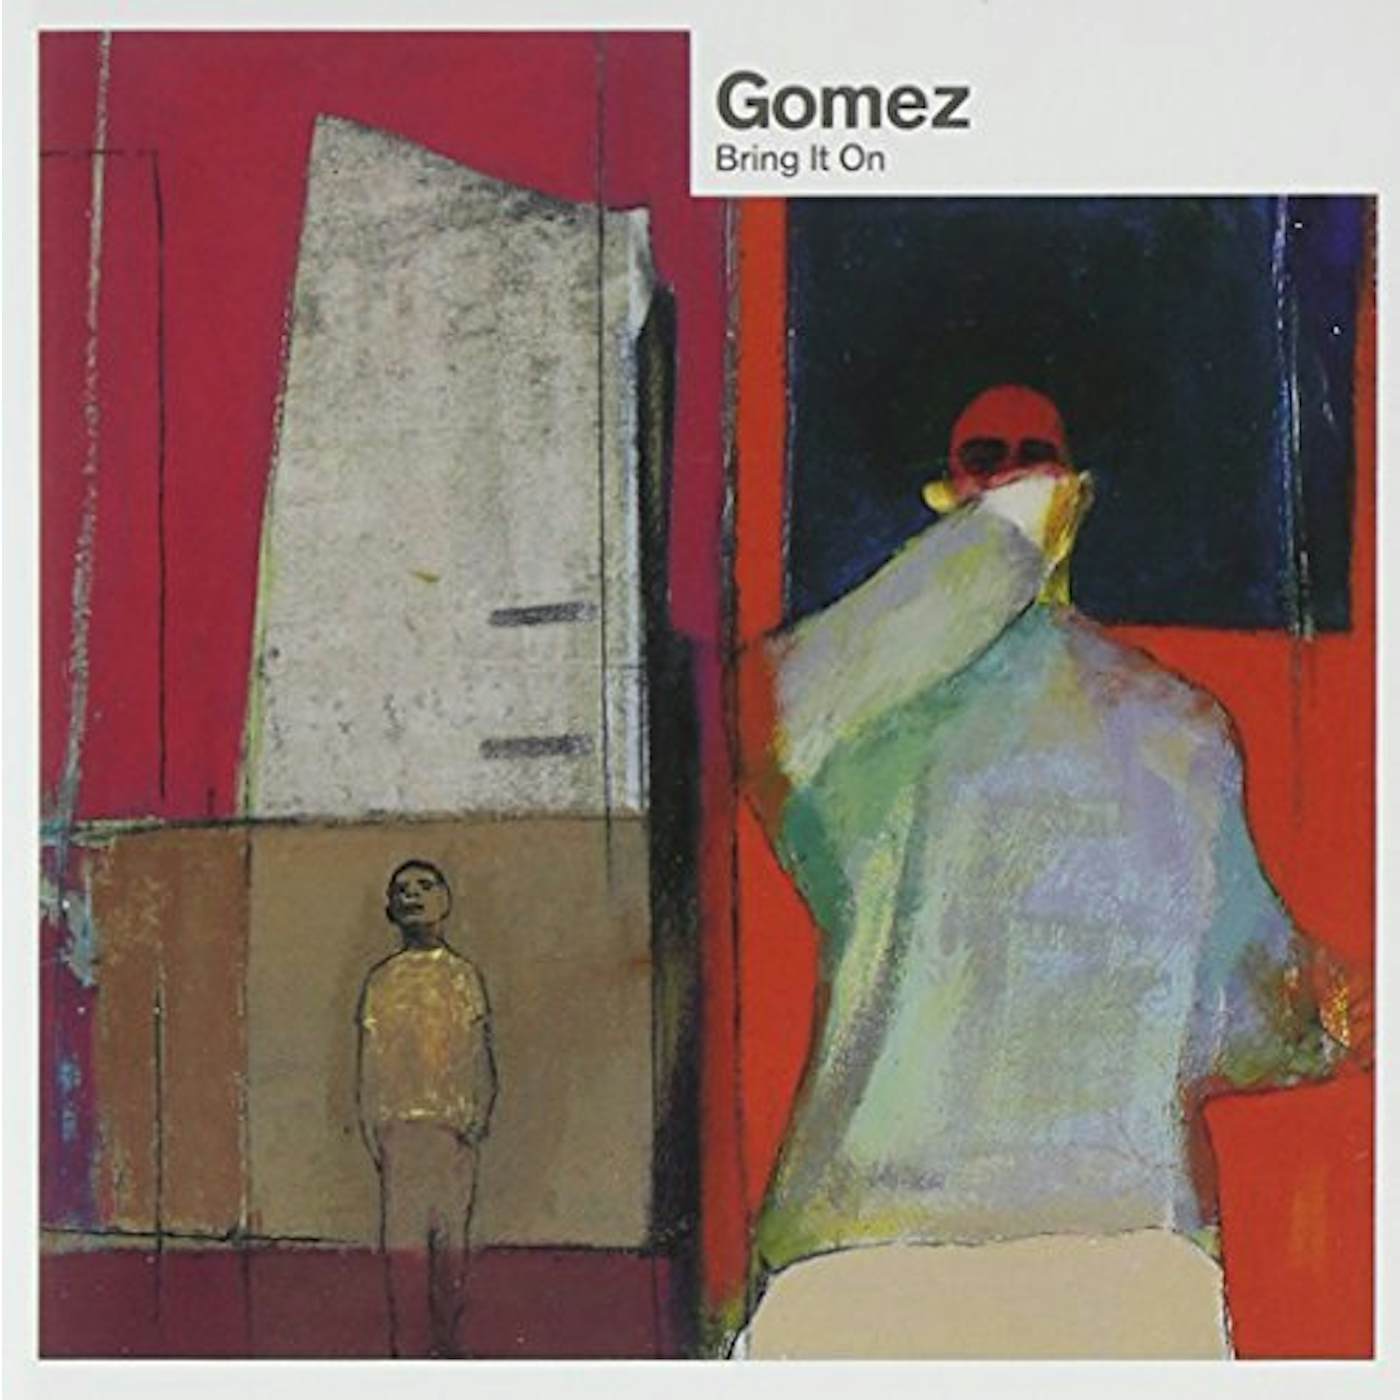 Gomez Bring It On Vinyl Record